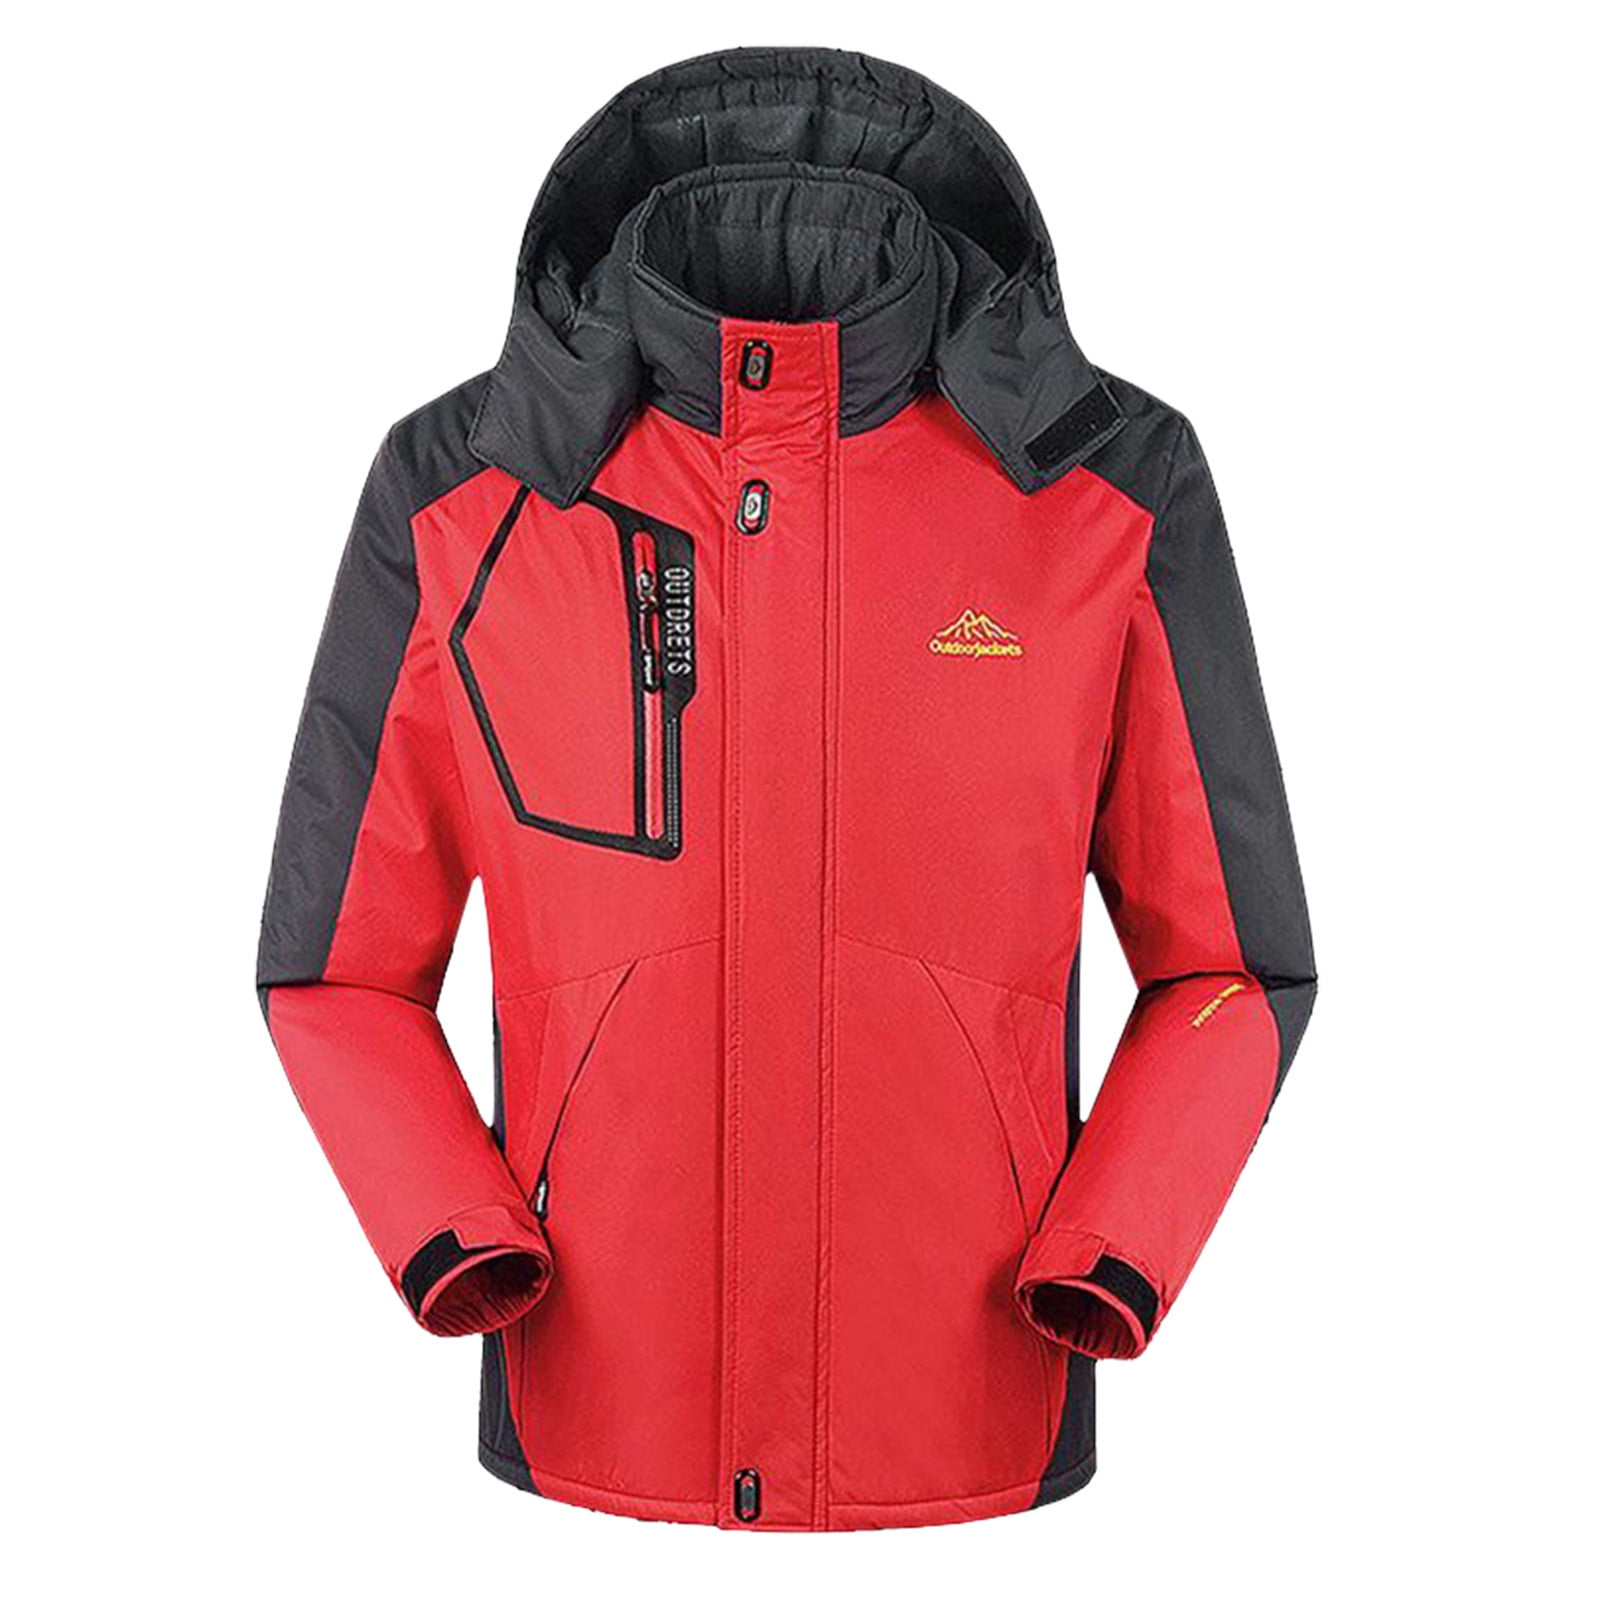 YODETEY Men'S Mountain Waterproof Ski Jacket Windproof Rain Jacket Winter  Warm Snow Coat with Removable Hood Red 12(XXL) 